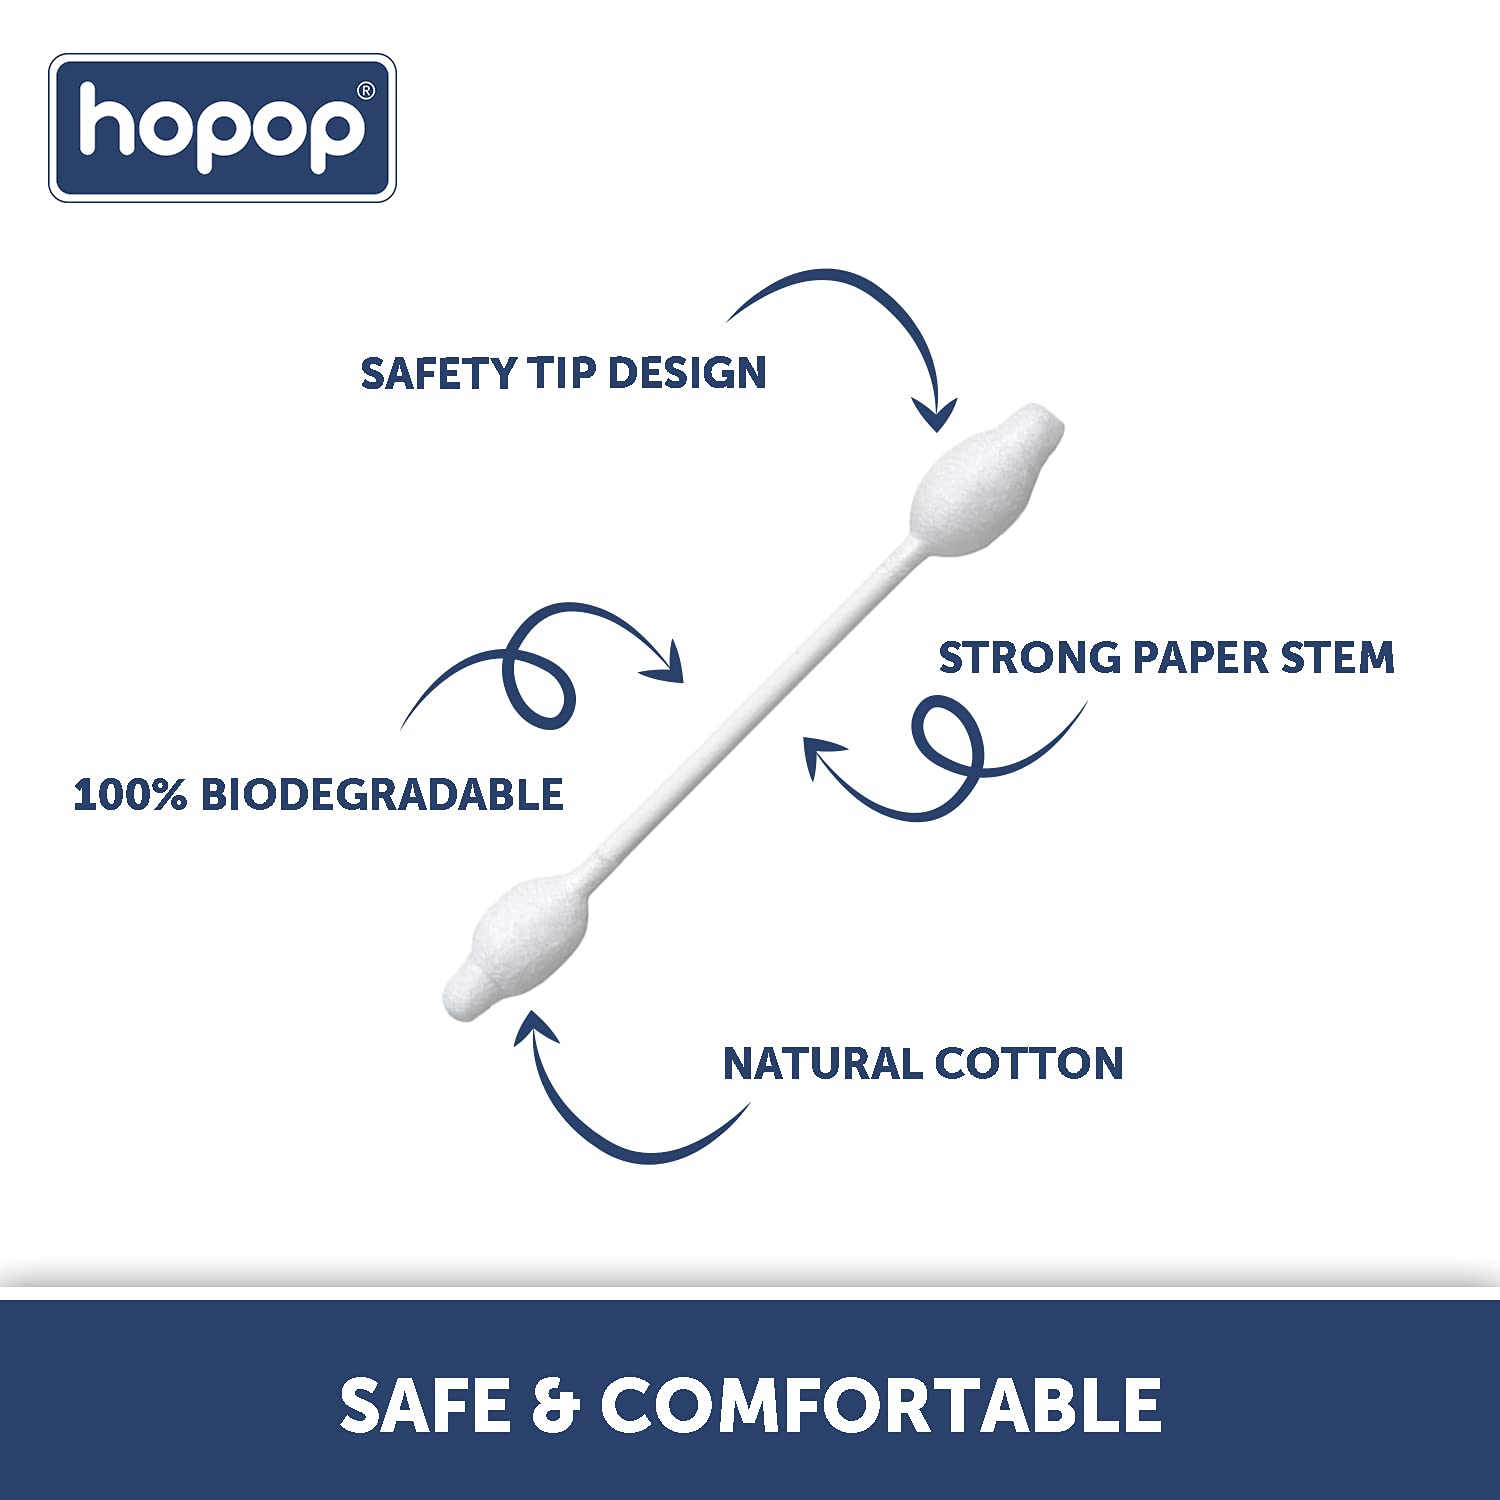 HOPOP Soft & Hygenic Cotton Earbuds For Babies - 55pcs 0m+